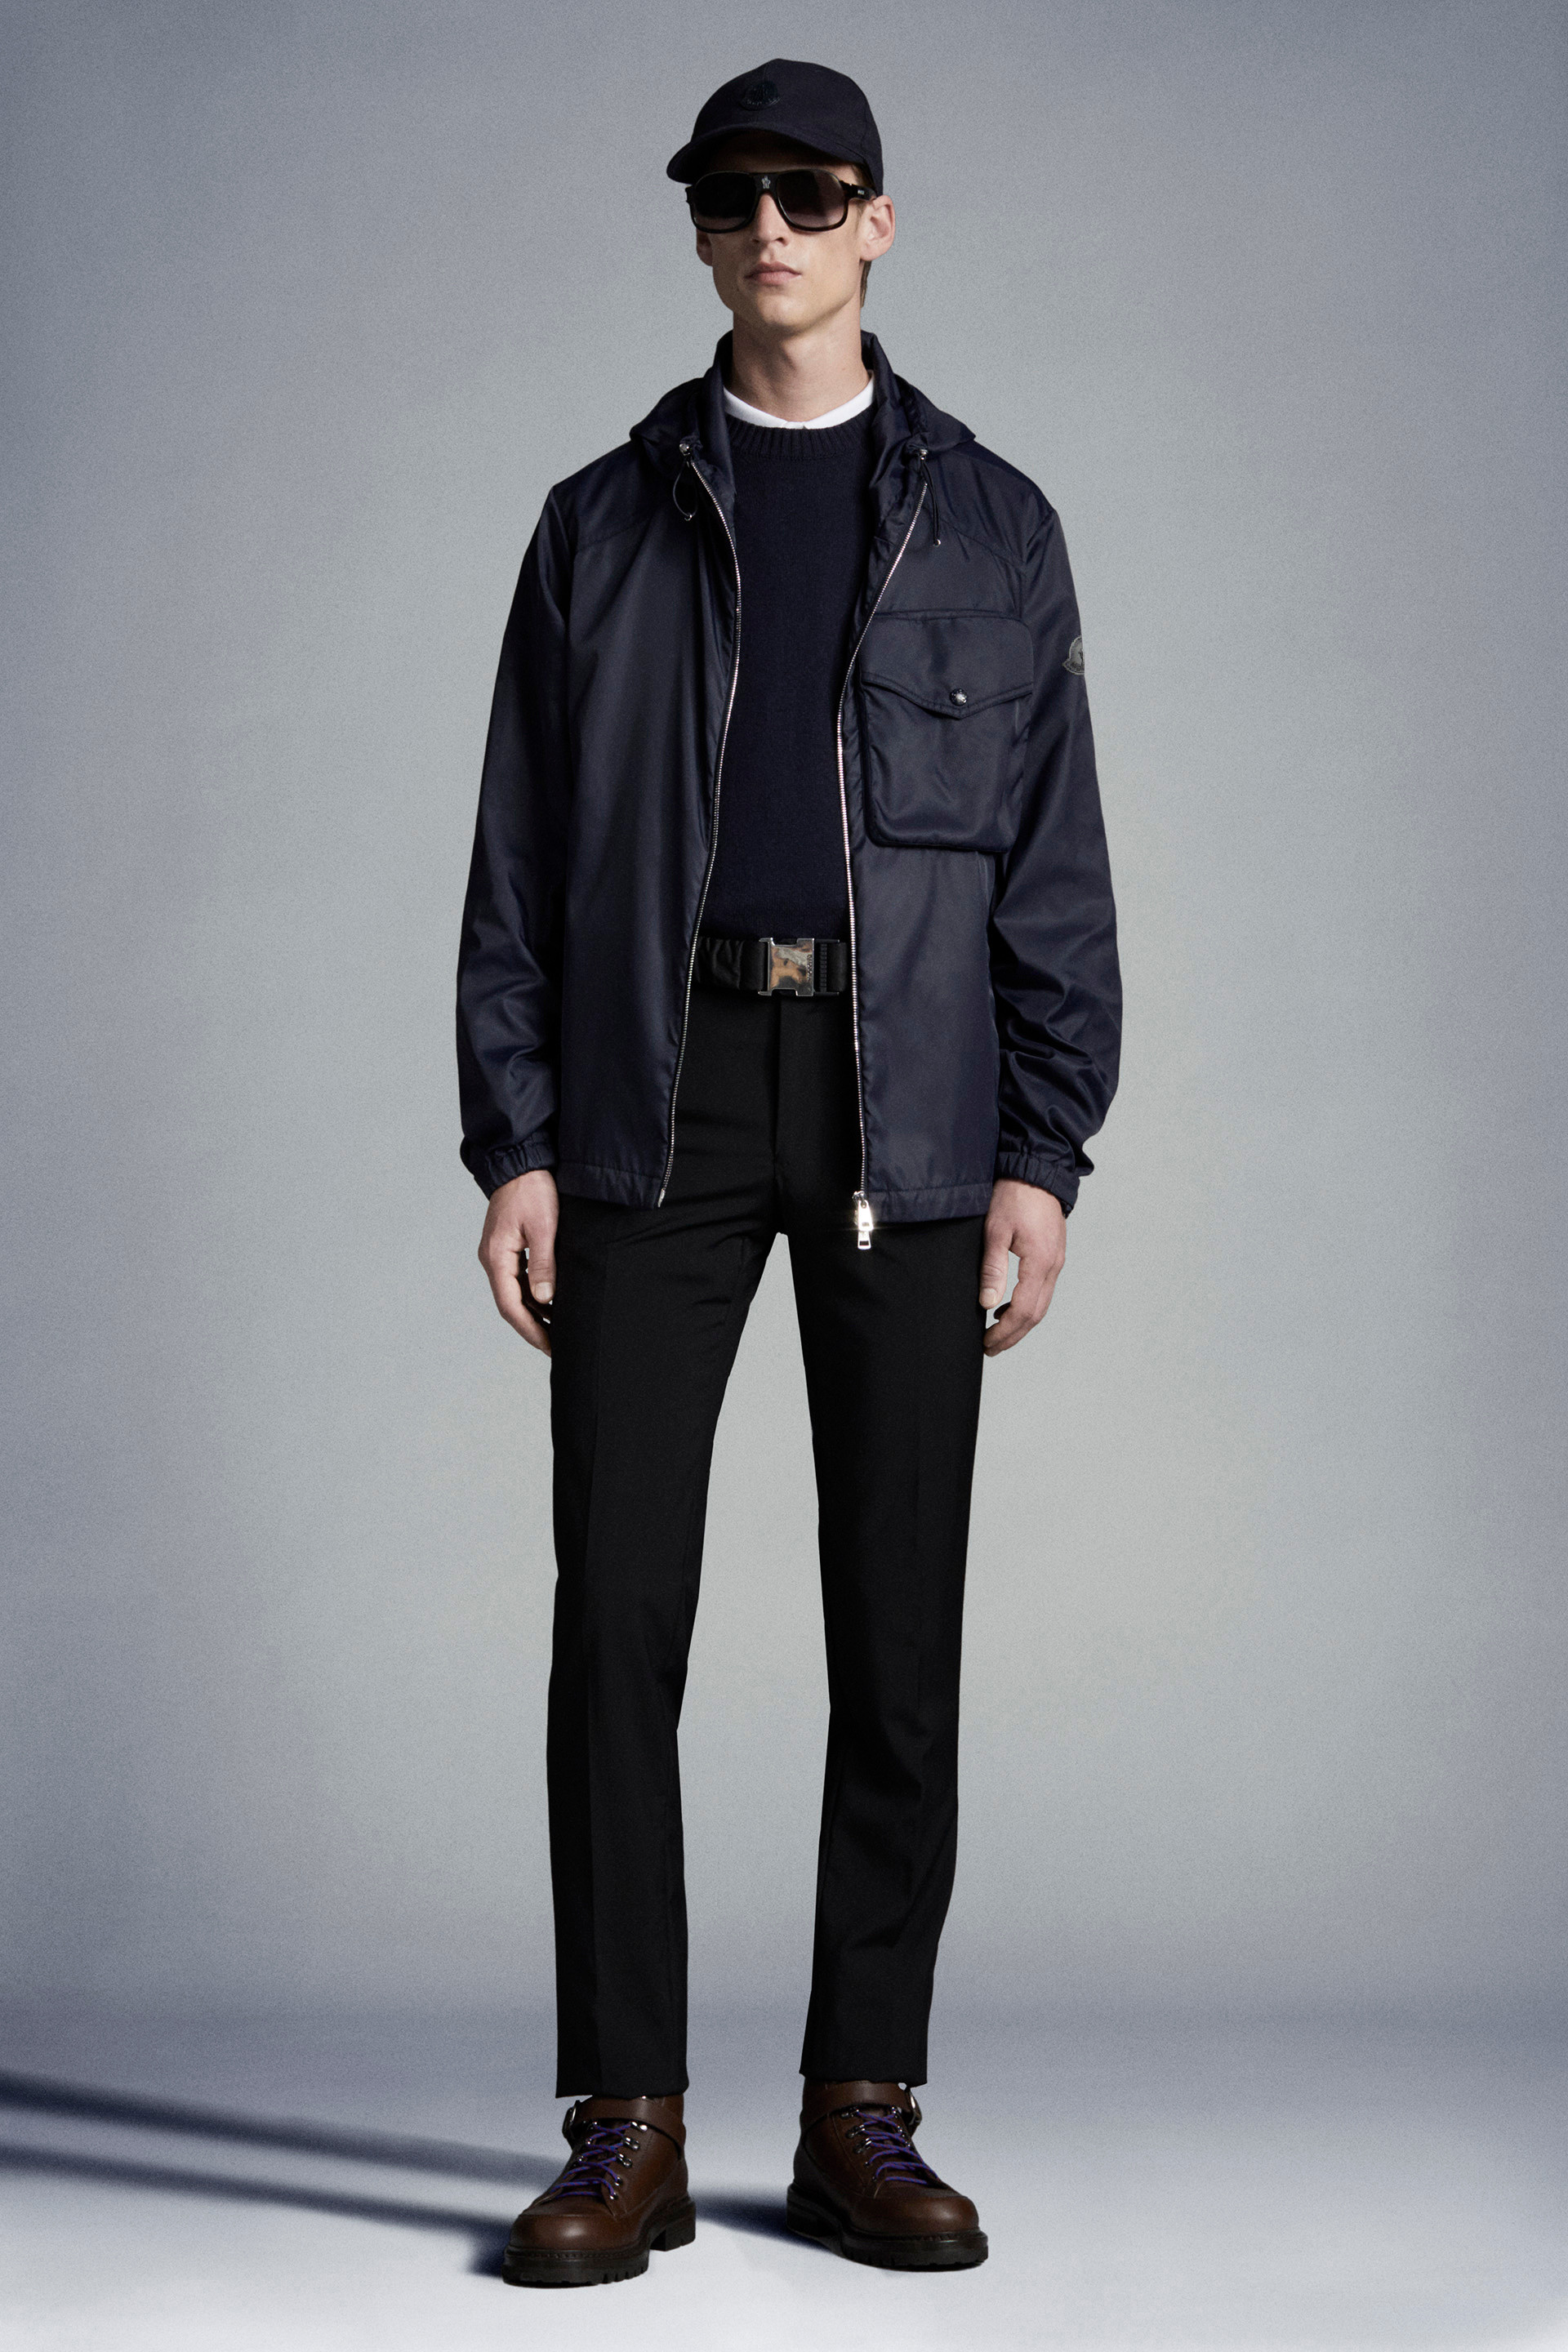 Jackets for Men - Outerwear | Moncler NL